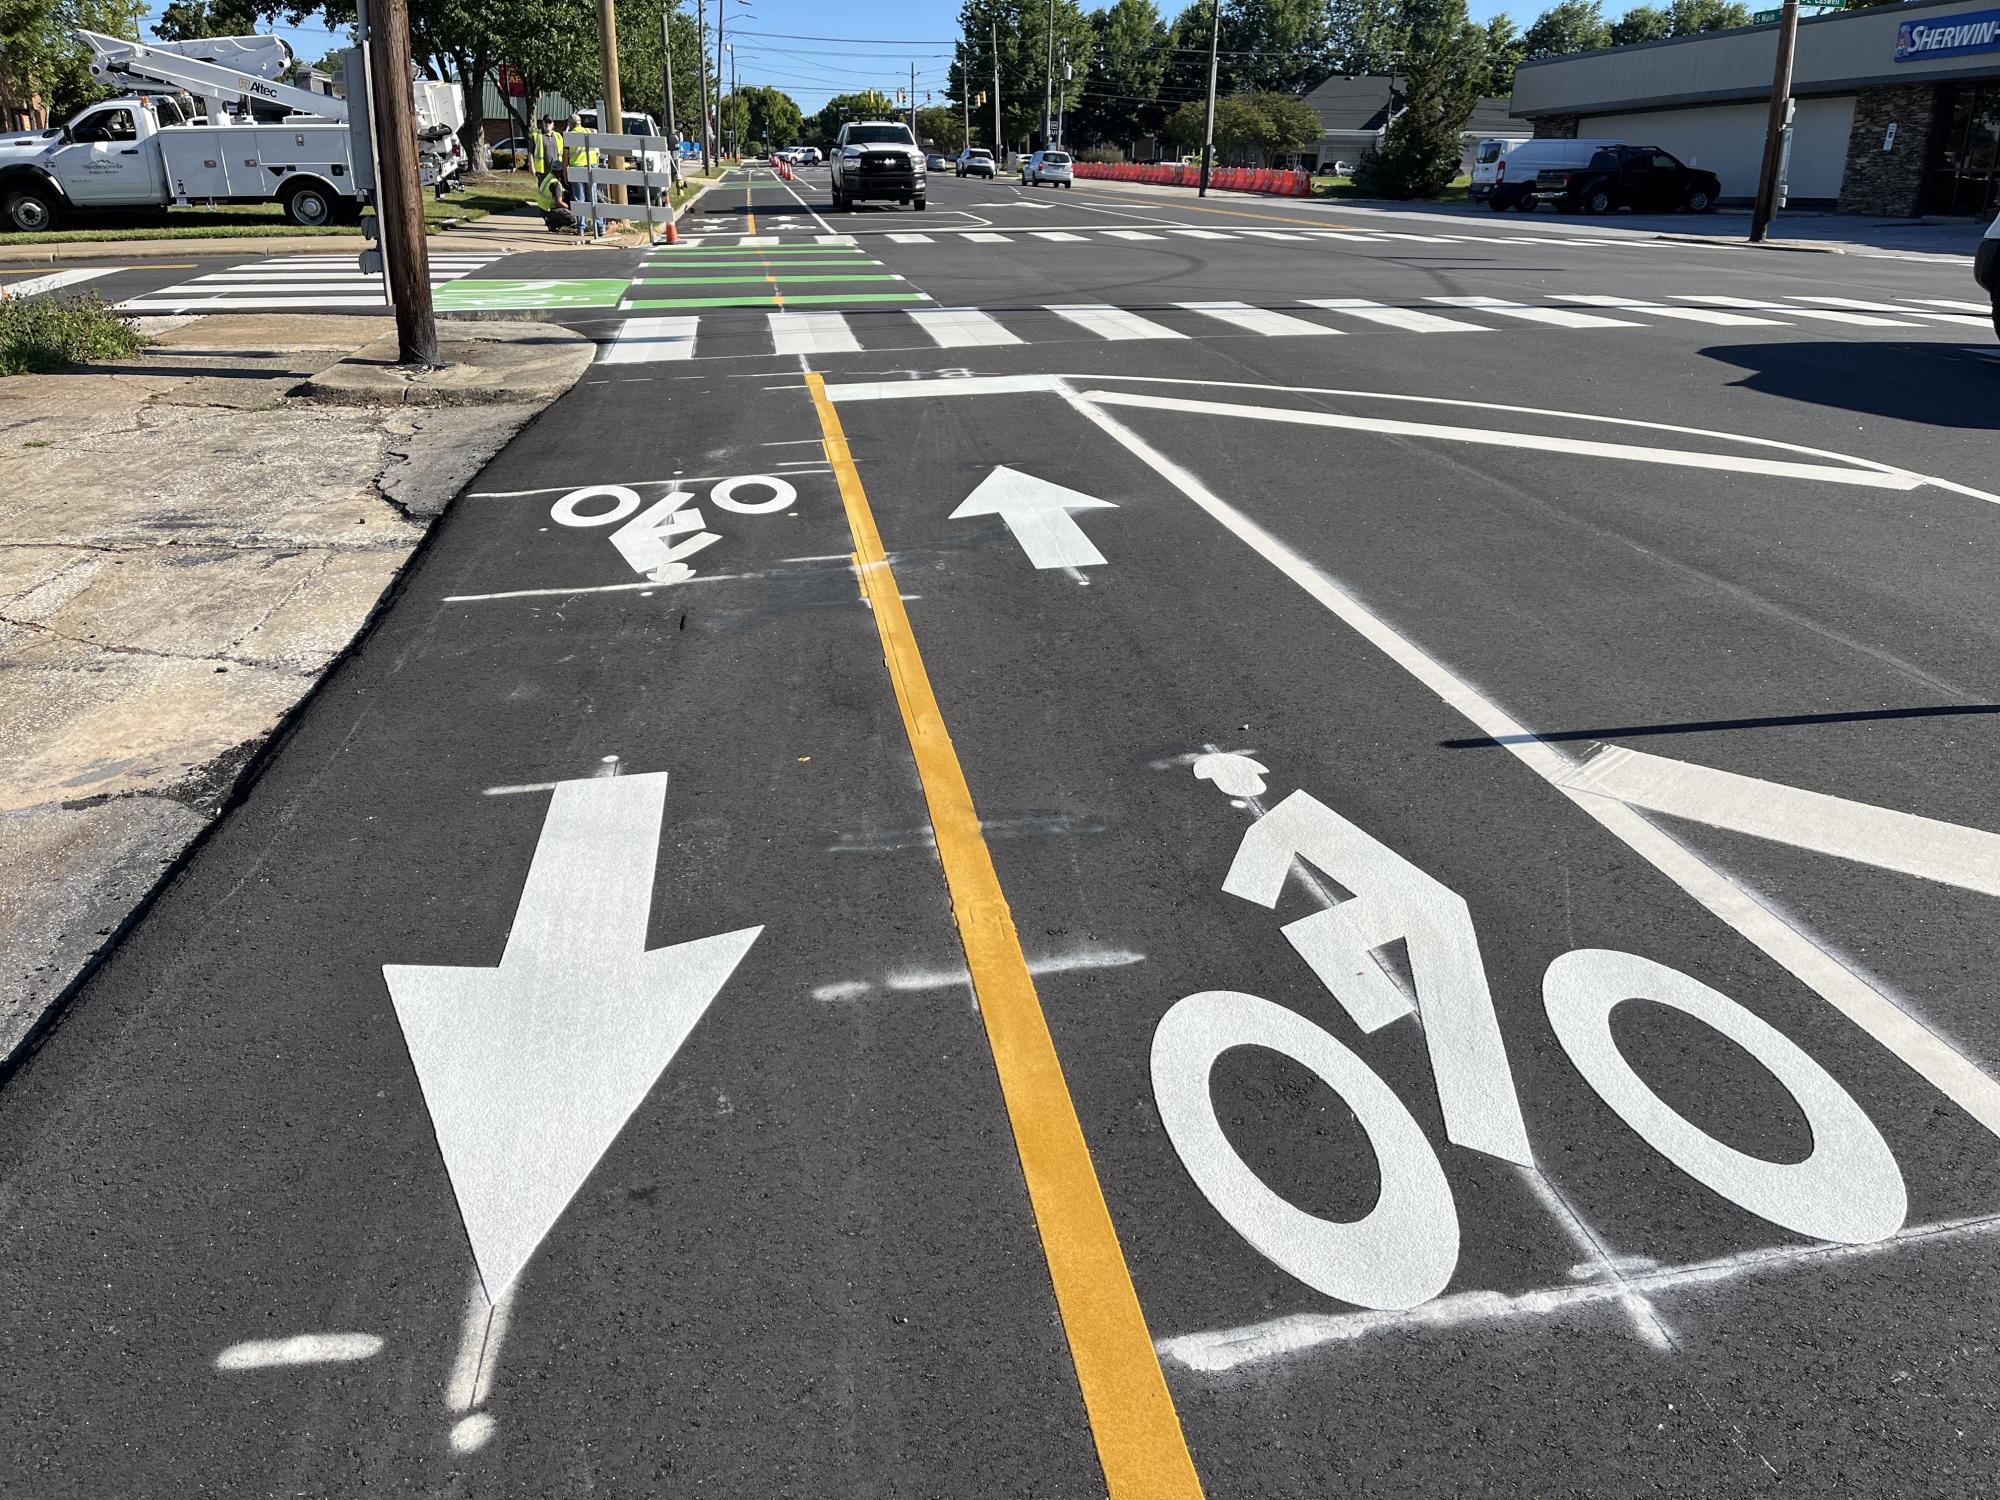 pavement marking for a bike lane